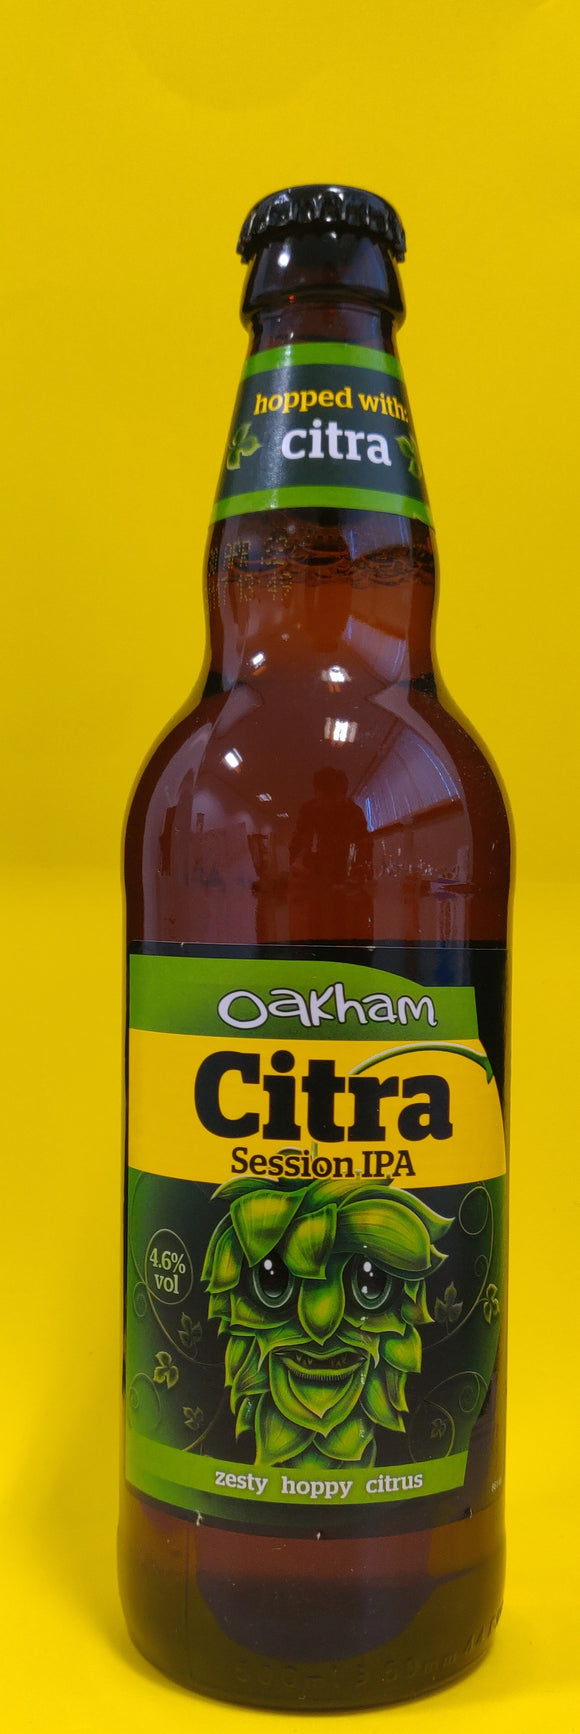 Oakham - Citra